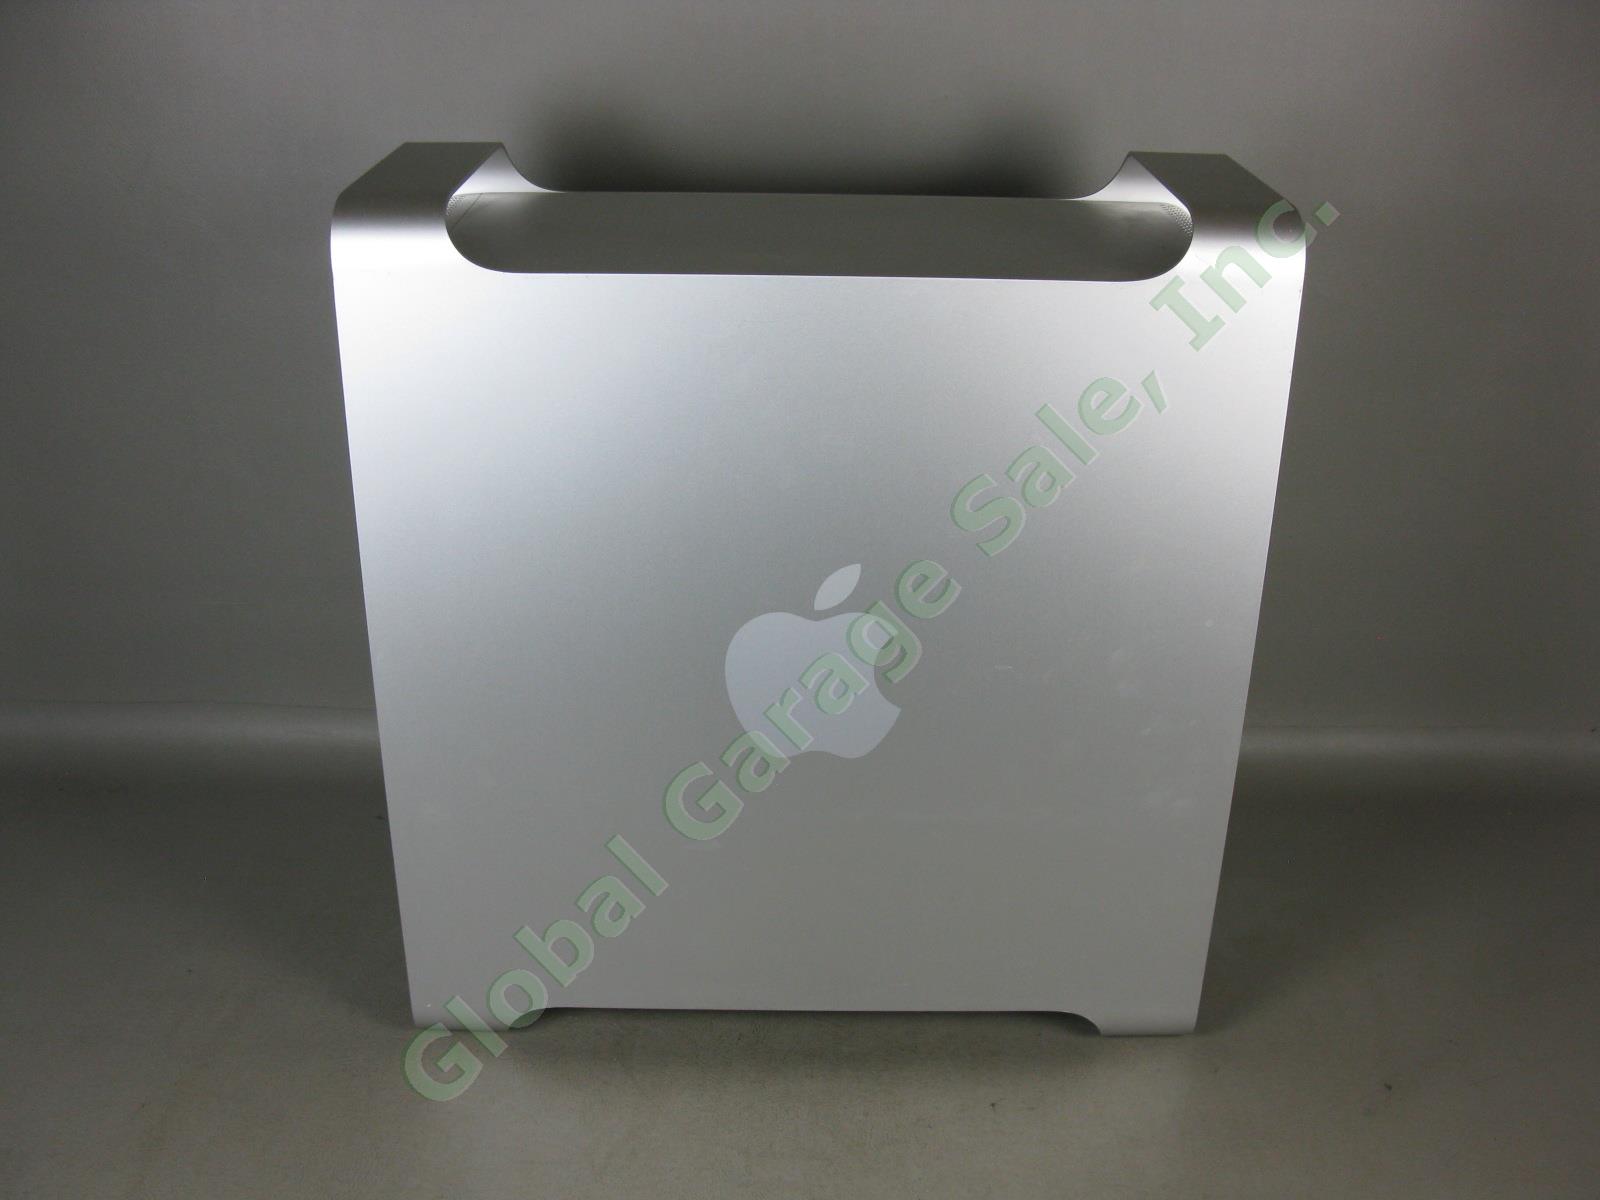 Apple Mac Pro A1186 Desktop Computer 7GB RAM 160GB HDD 2GHz Dual Core Xeon 10.6 4